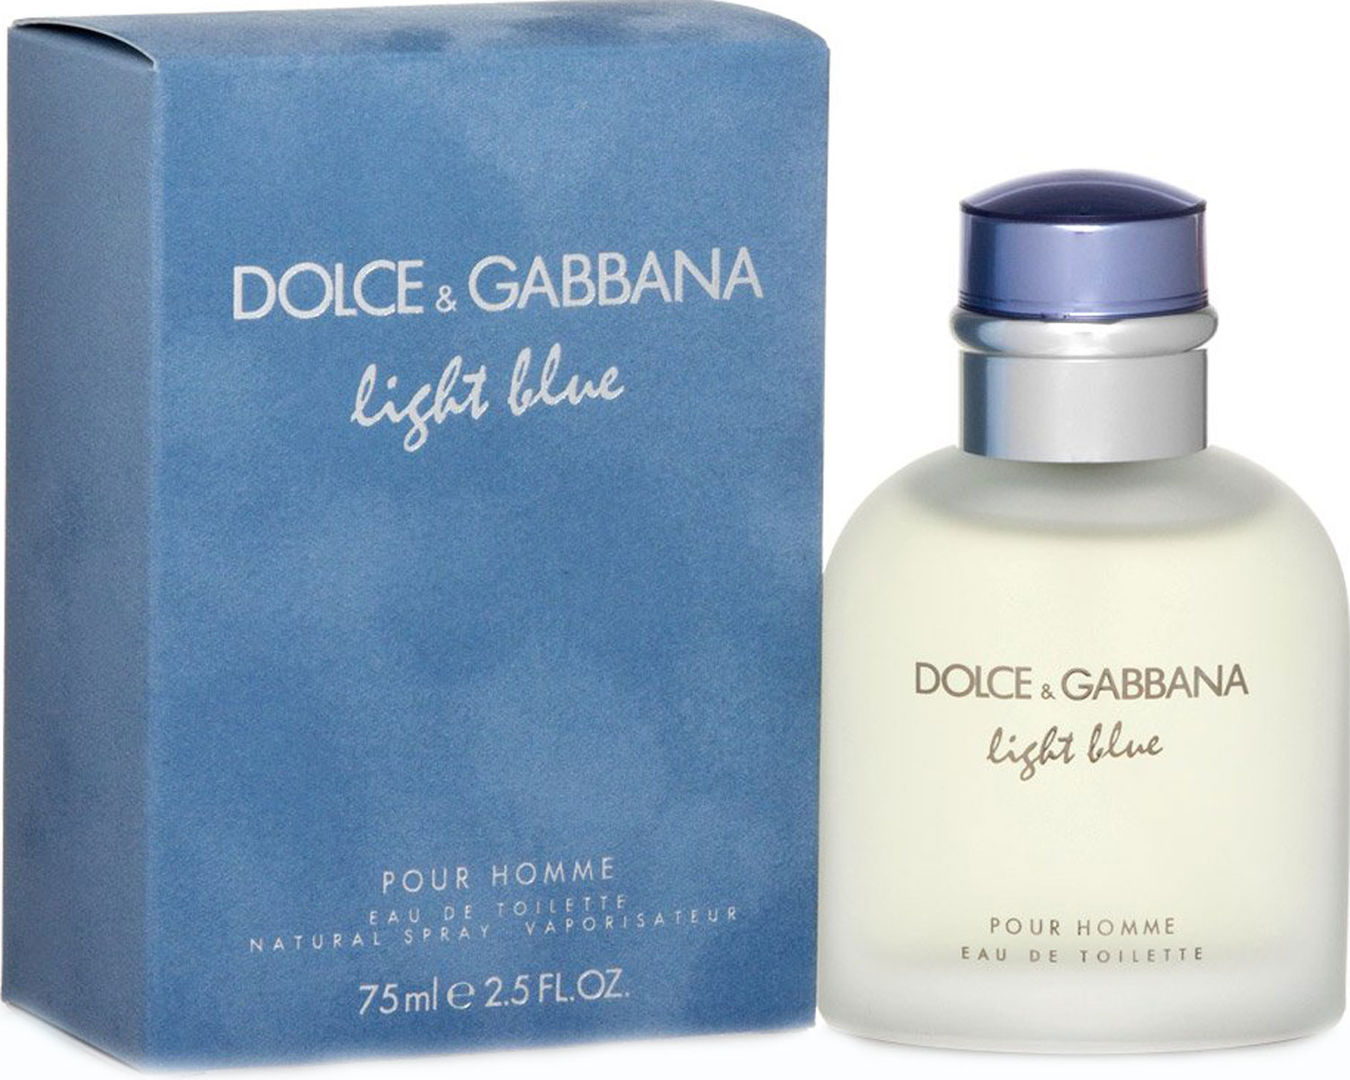 Туалетная вода дольче габбана лайт. Духи Дольче Габбана Лайт Блю. Light Blue Dolce & Gabbana, 100ml, EDT. Дольче Габбана Light Blue pour homme 125. Dolce&Gabbana Light Blue туалетная вода 100 мл.